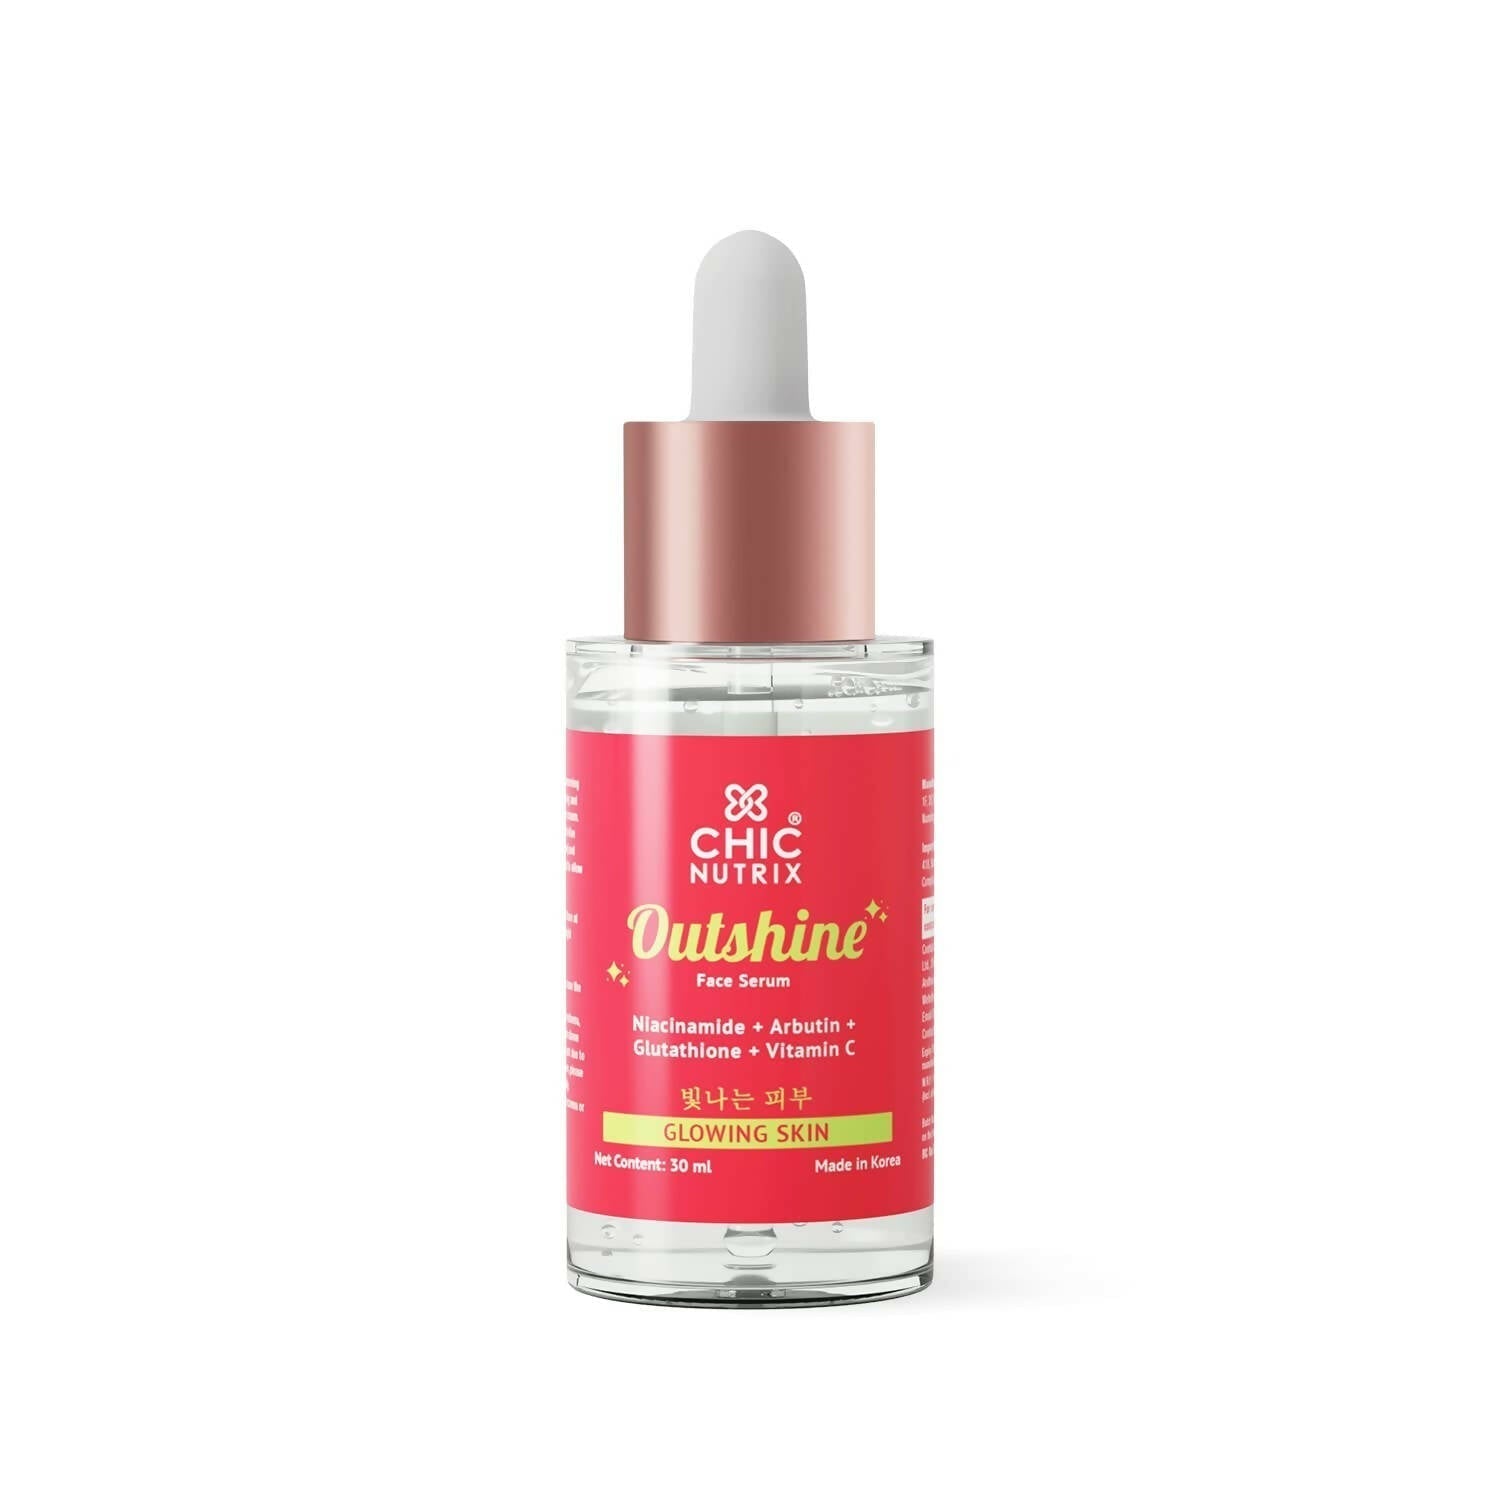 Chicnutrix Outshine Face Serum - Niacinamide + Vitamin C + Glutathione + Arbutin - Glowing Skin - BUDNE